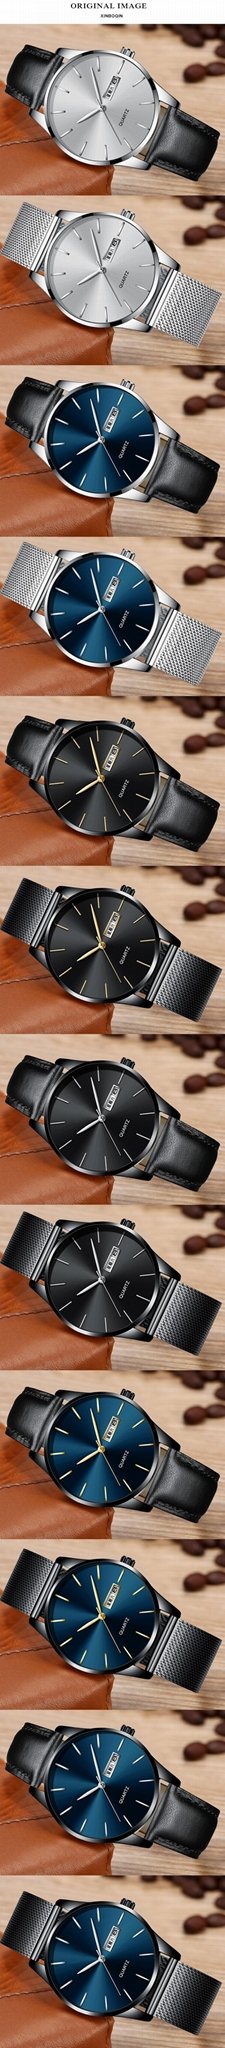 XINBOQIN Manufacturer Wholesale Fashion Charm Mens Ultra Thin Quartz Wrist Watch 5